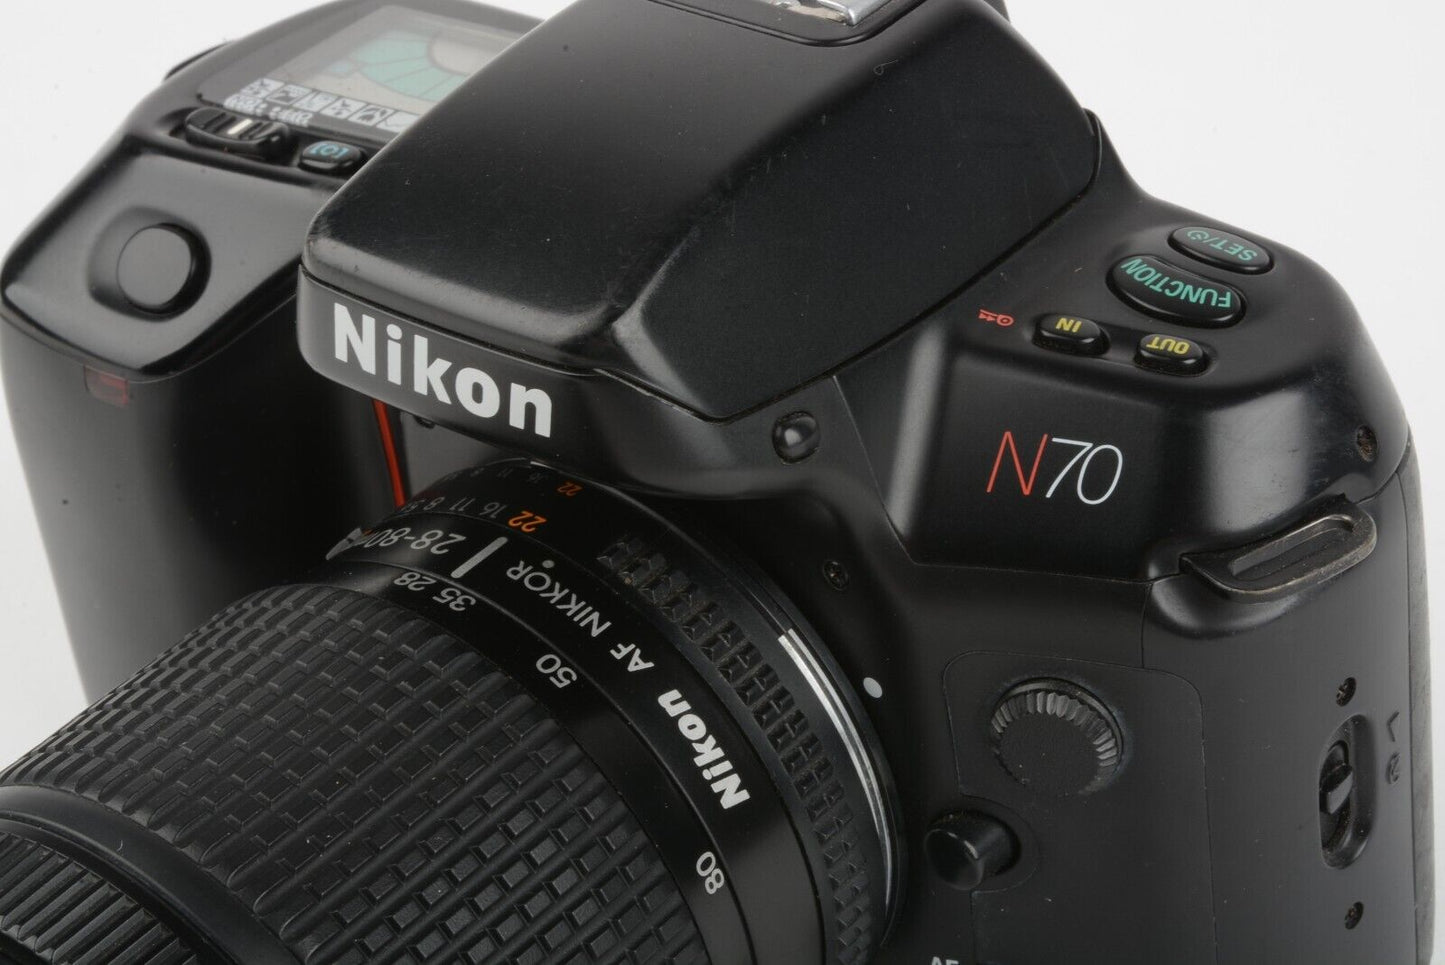 EXC++ NIKON N70 35mm SLR w/28-80mm F3.5-5.6D ZOOM LENS, STRAP+MANUAL+UV TESTED